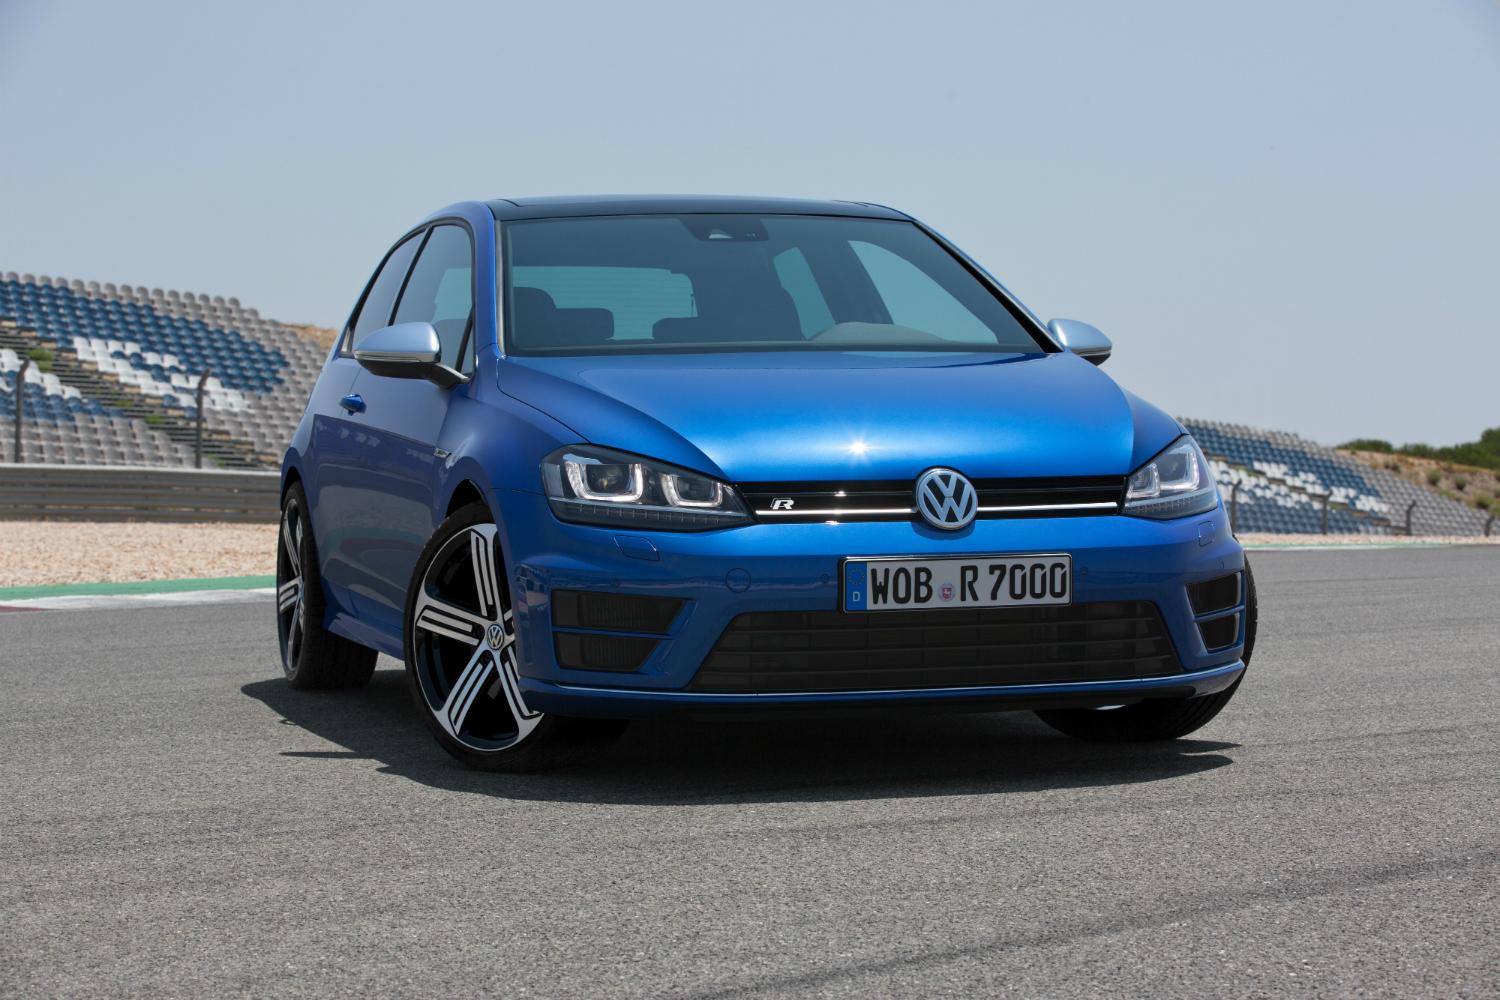 2015 Volkswagen Golf R | Specs, pictures, and performance | Digital Trends